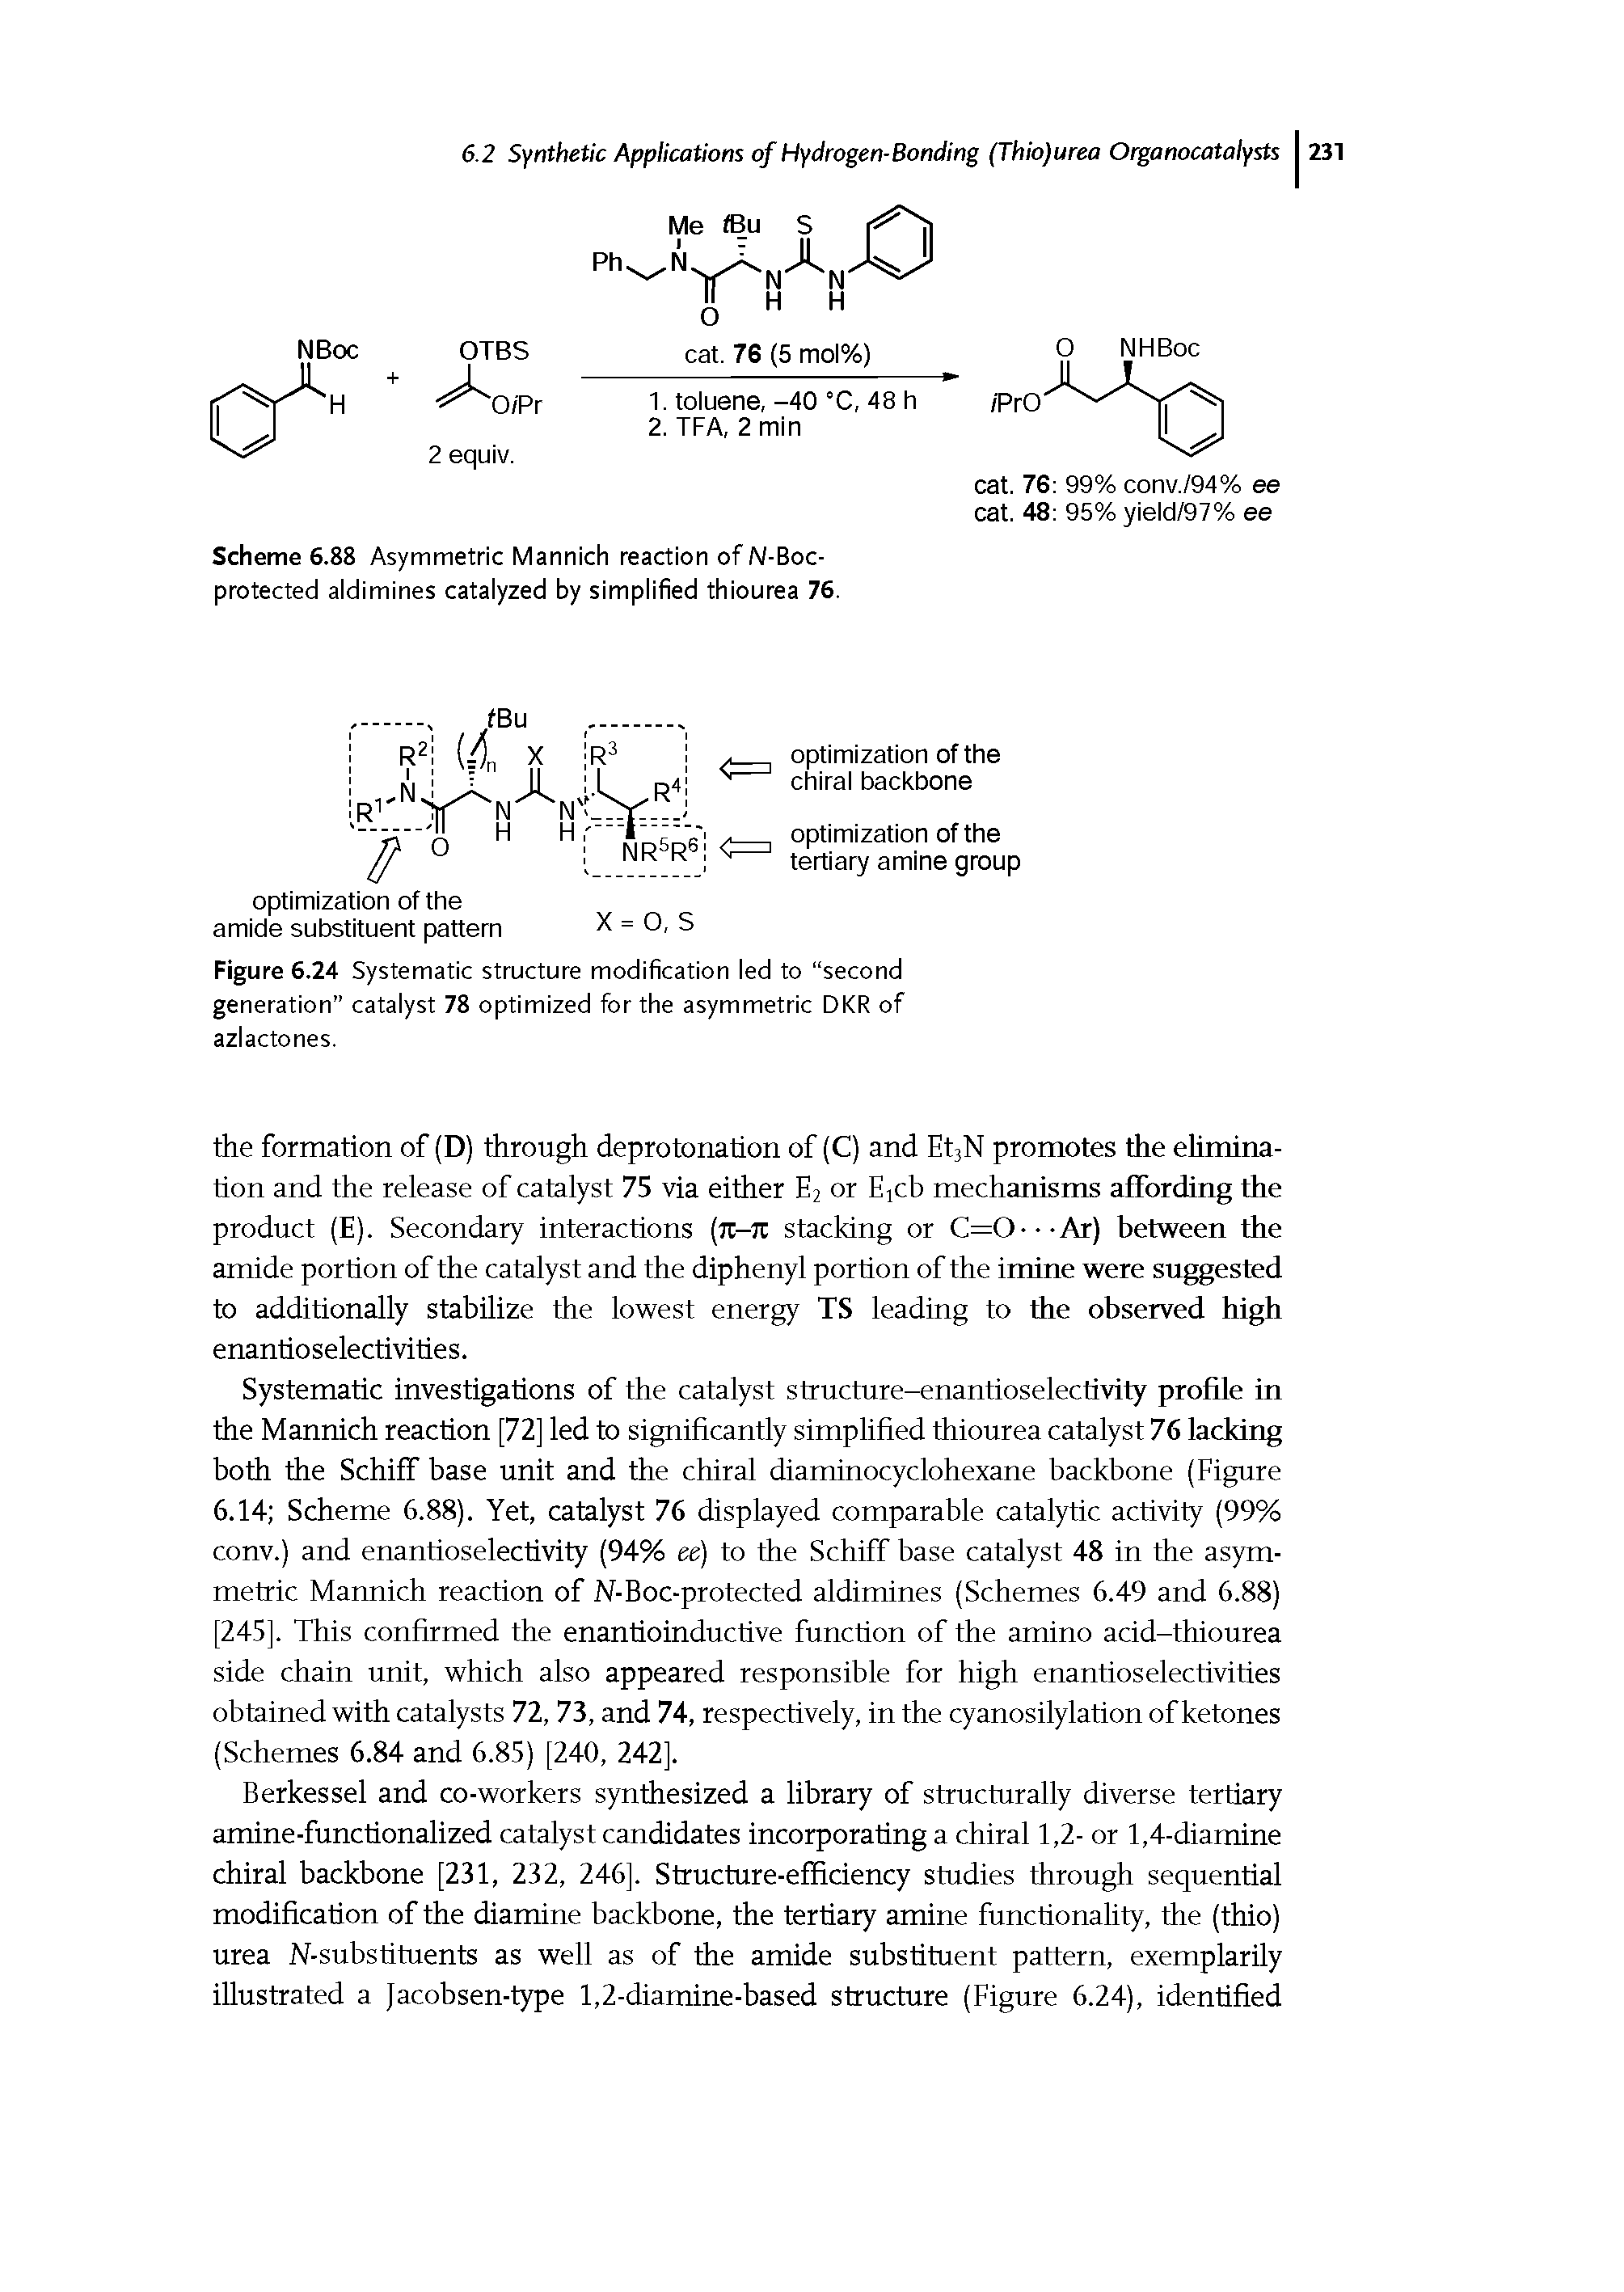 Scheme 6.88 Asymmetric Mannich reaction of N-Boc-protected aldimines catalyzed by simplified thiourea 76.